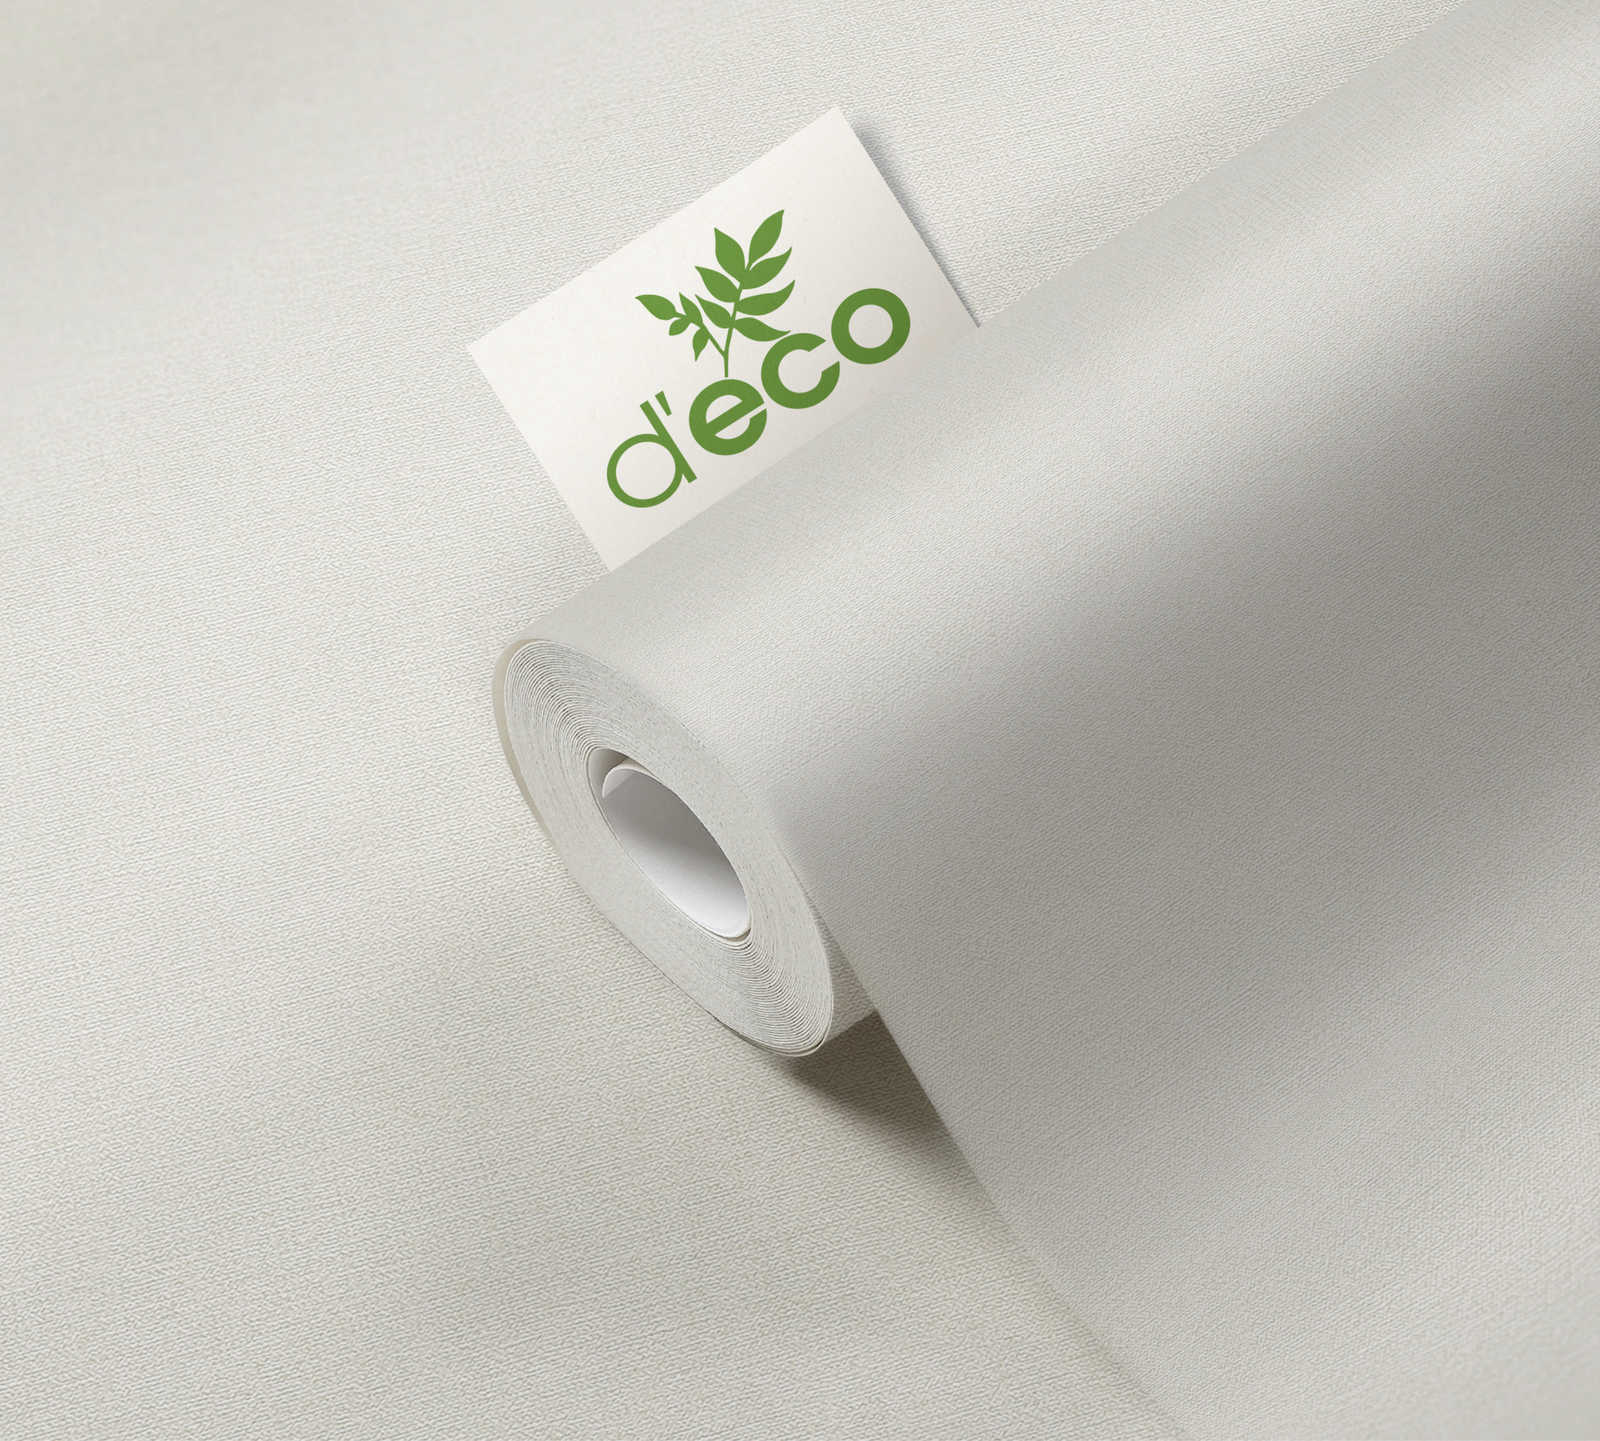             Textiloptiktapete einfarbiges Design PVC-frei – Weiß, Creme
        